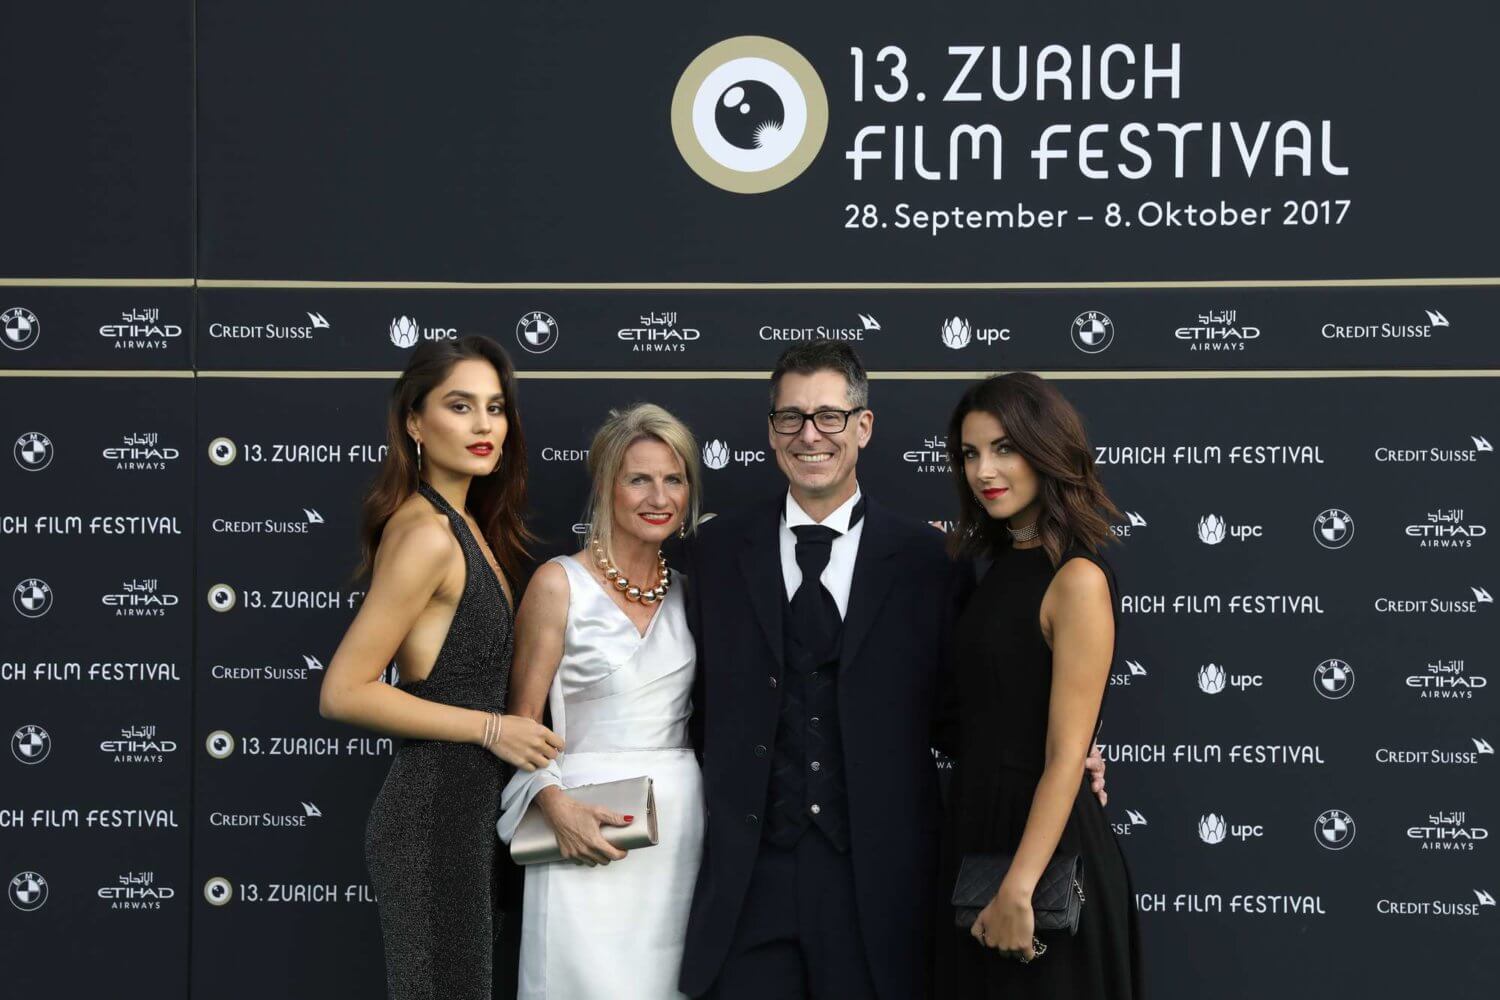 Big Gala Nite at Zurich Film Festival with Bucherer 